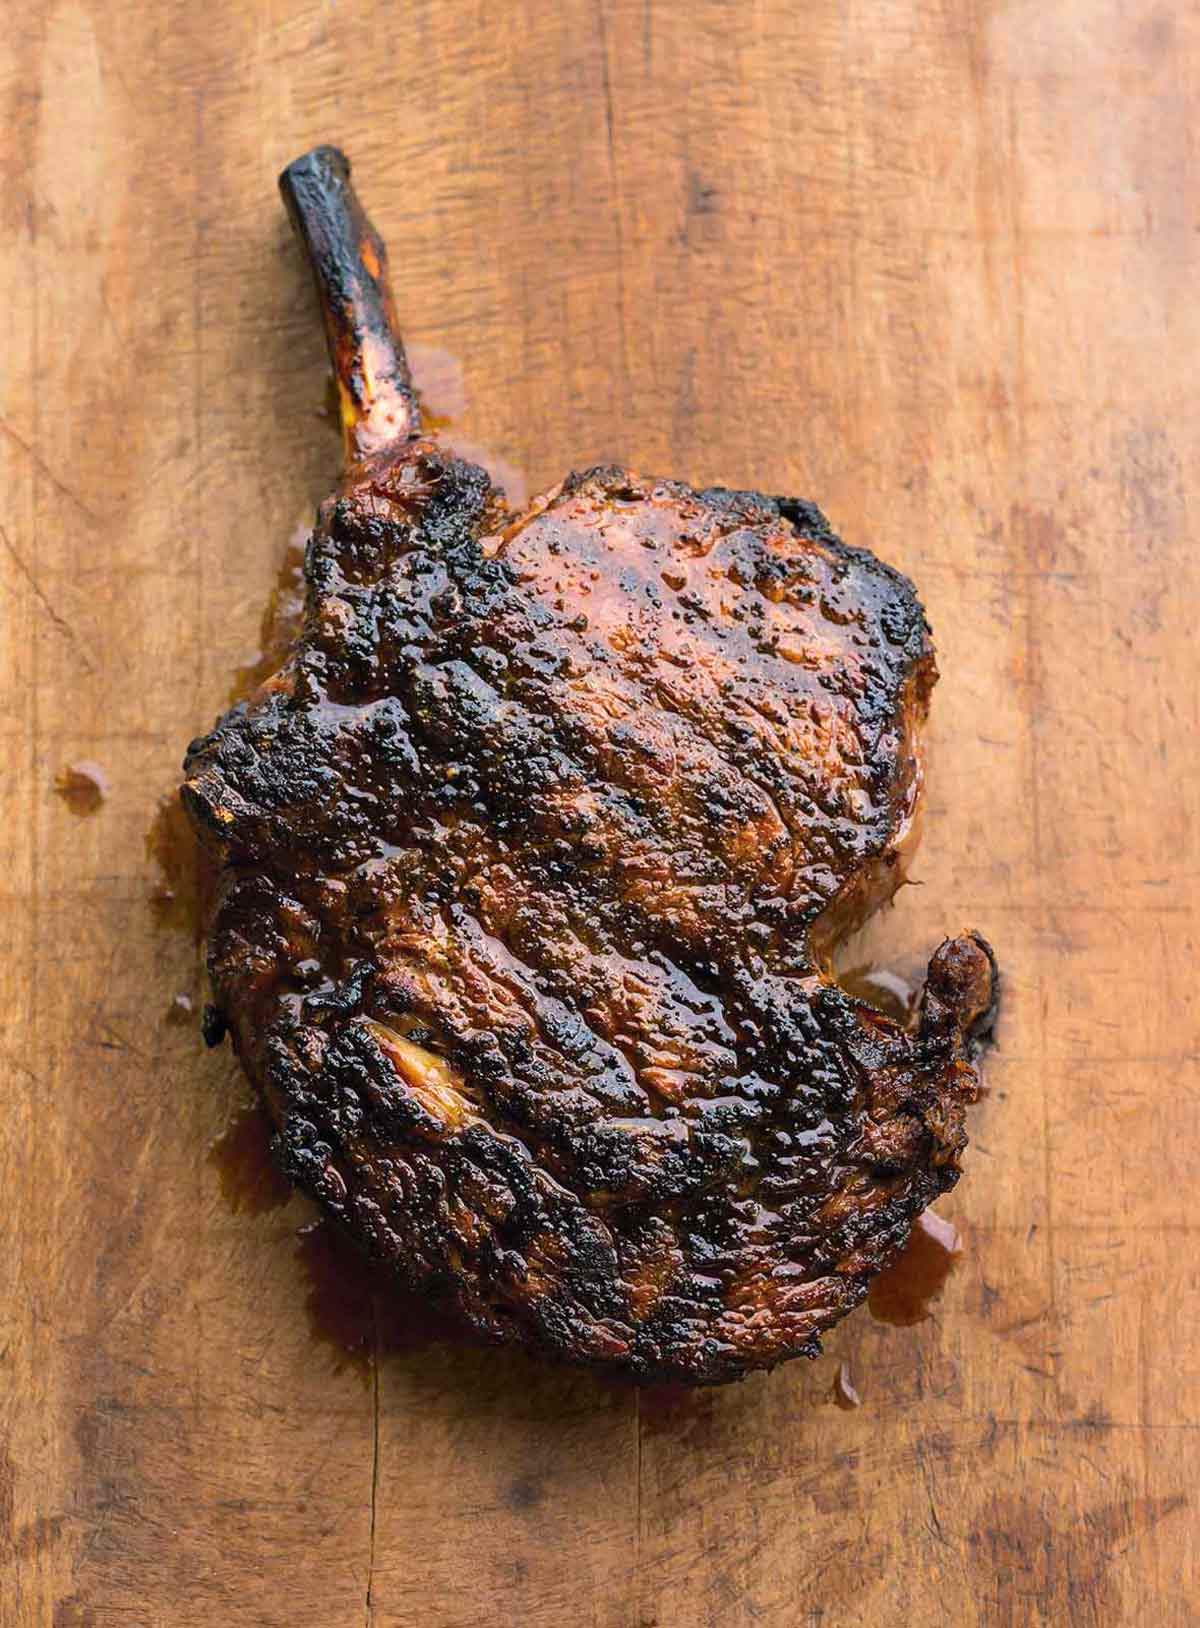 A grilled cowboy steak with coffee rub on a wooden cutting board.